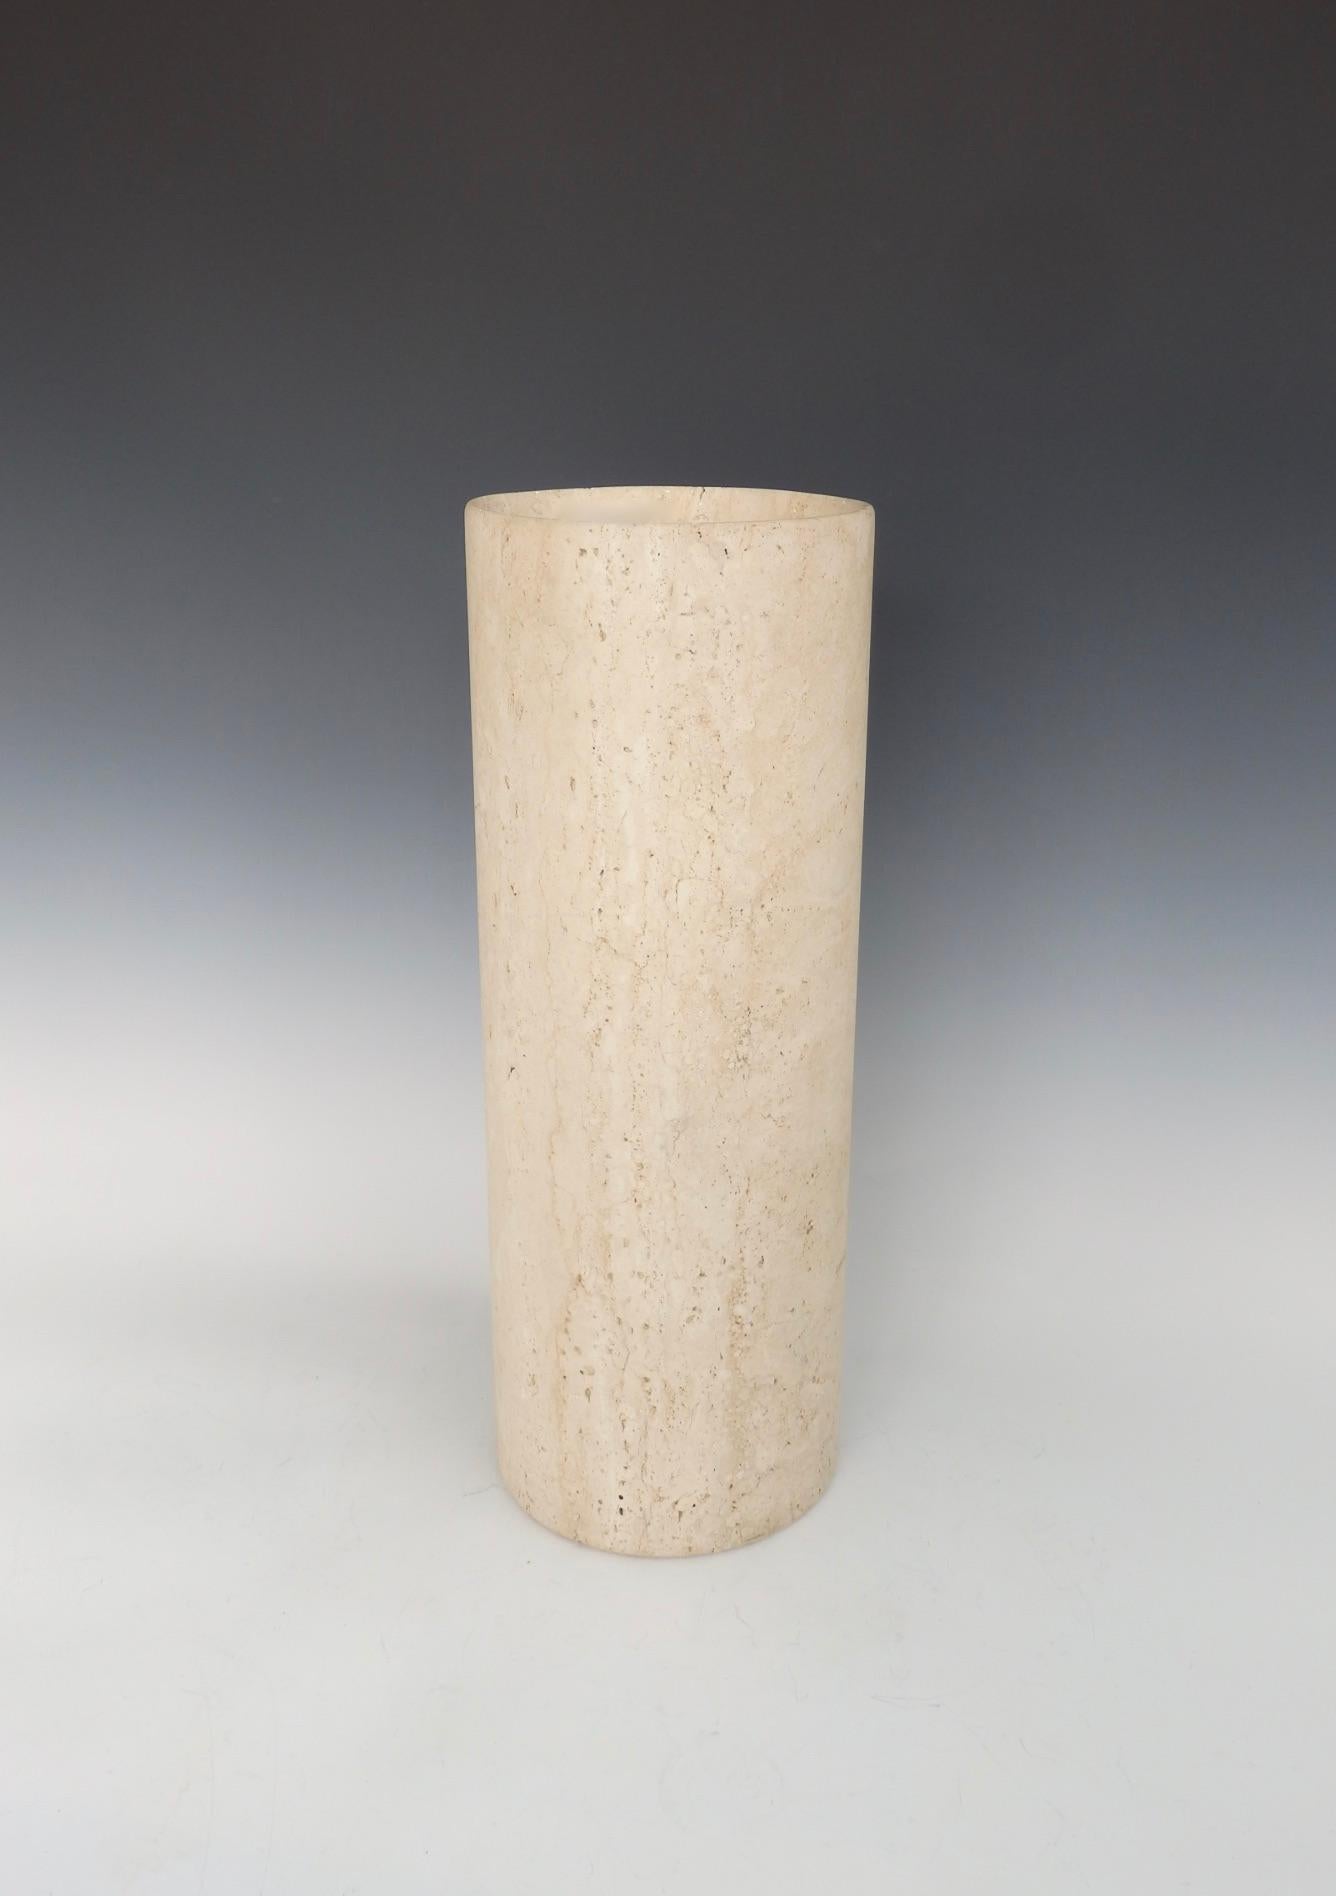 Nicely grained Travertene stone floor vase. Could double as umbrella holder or planter pot.